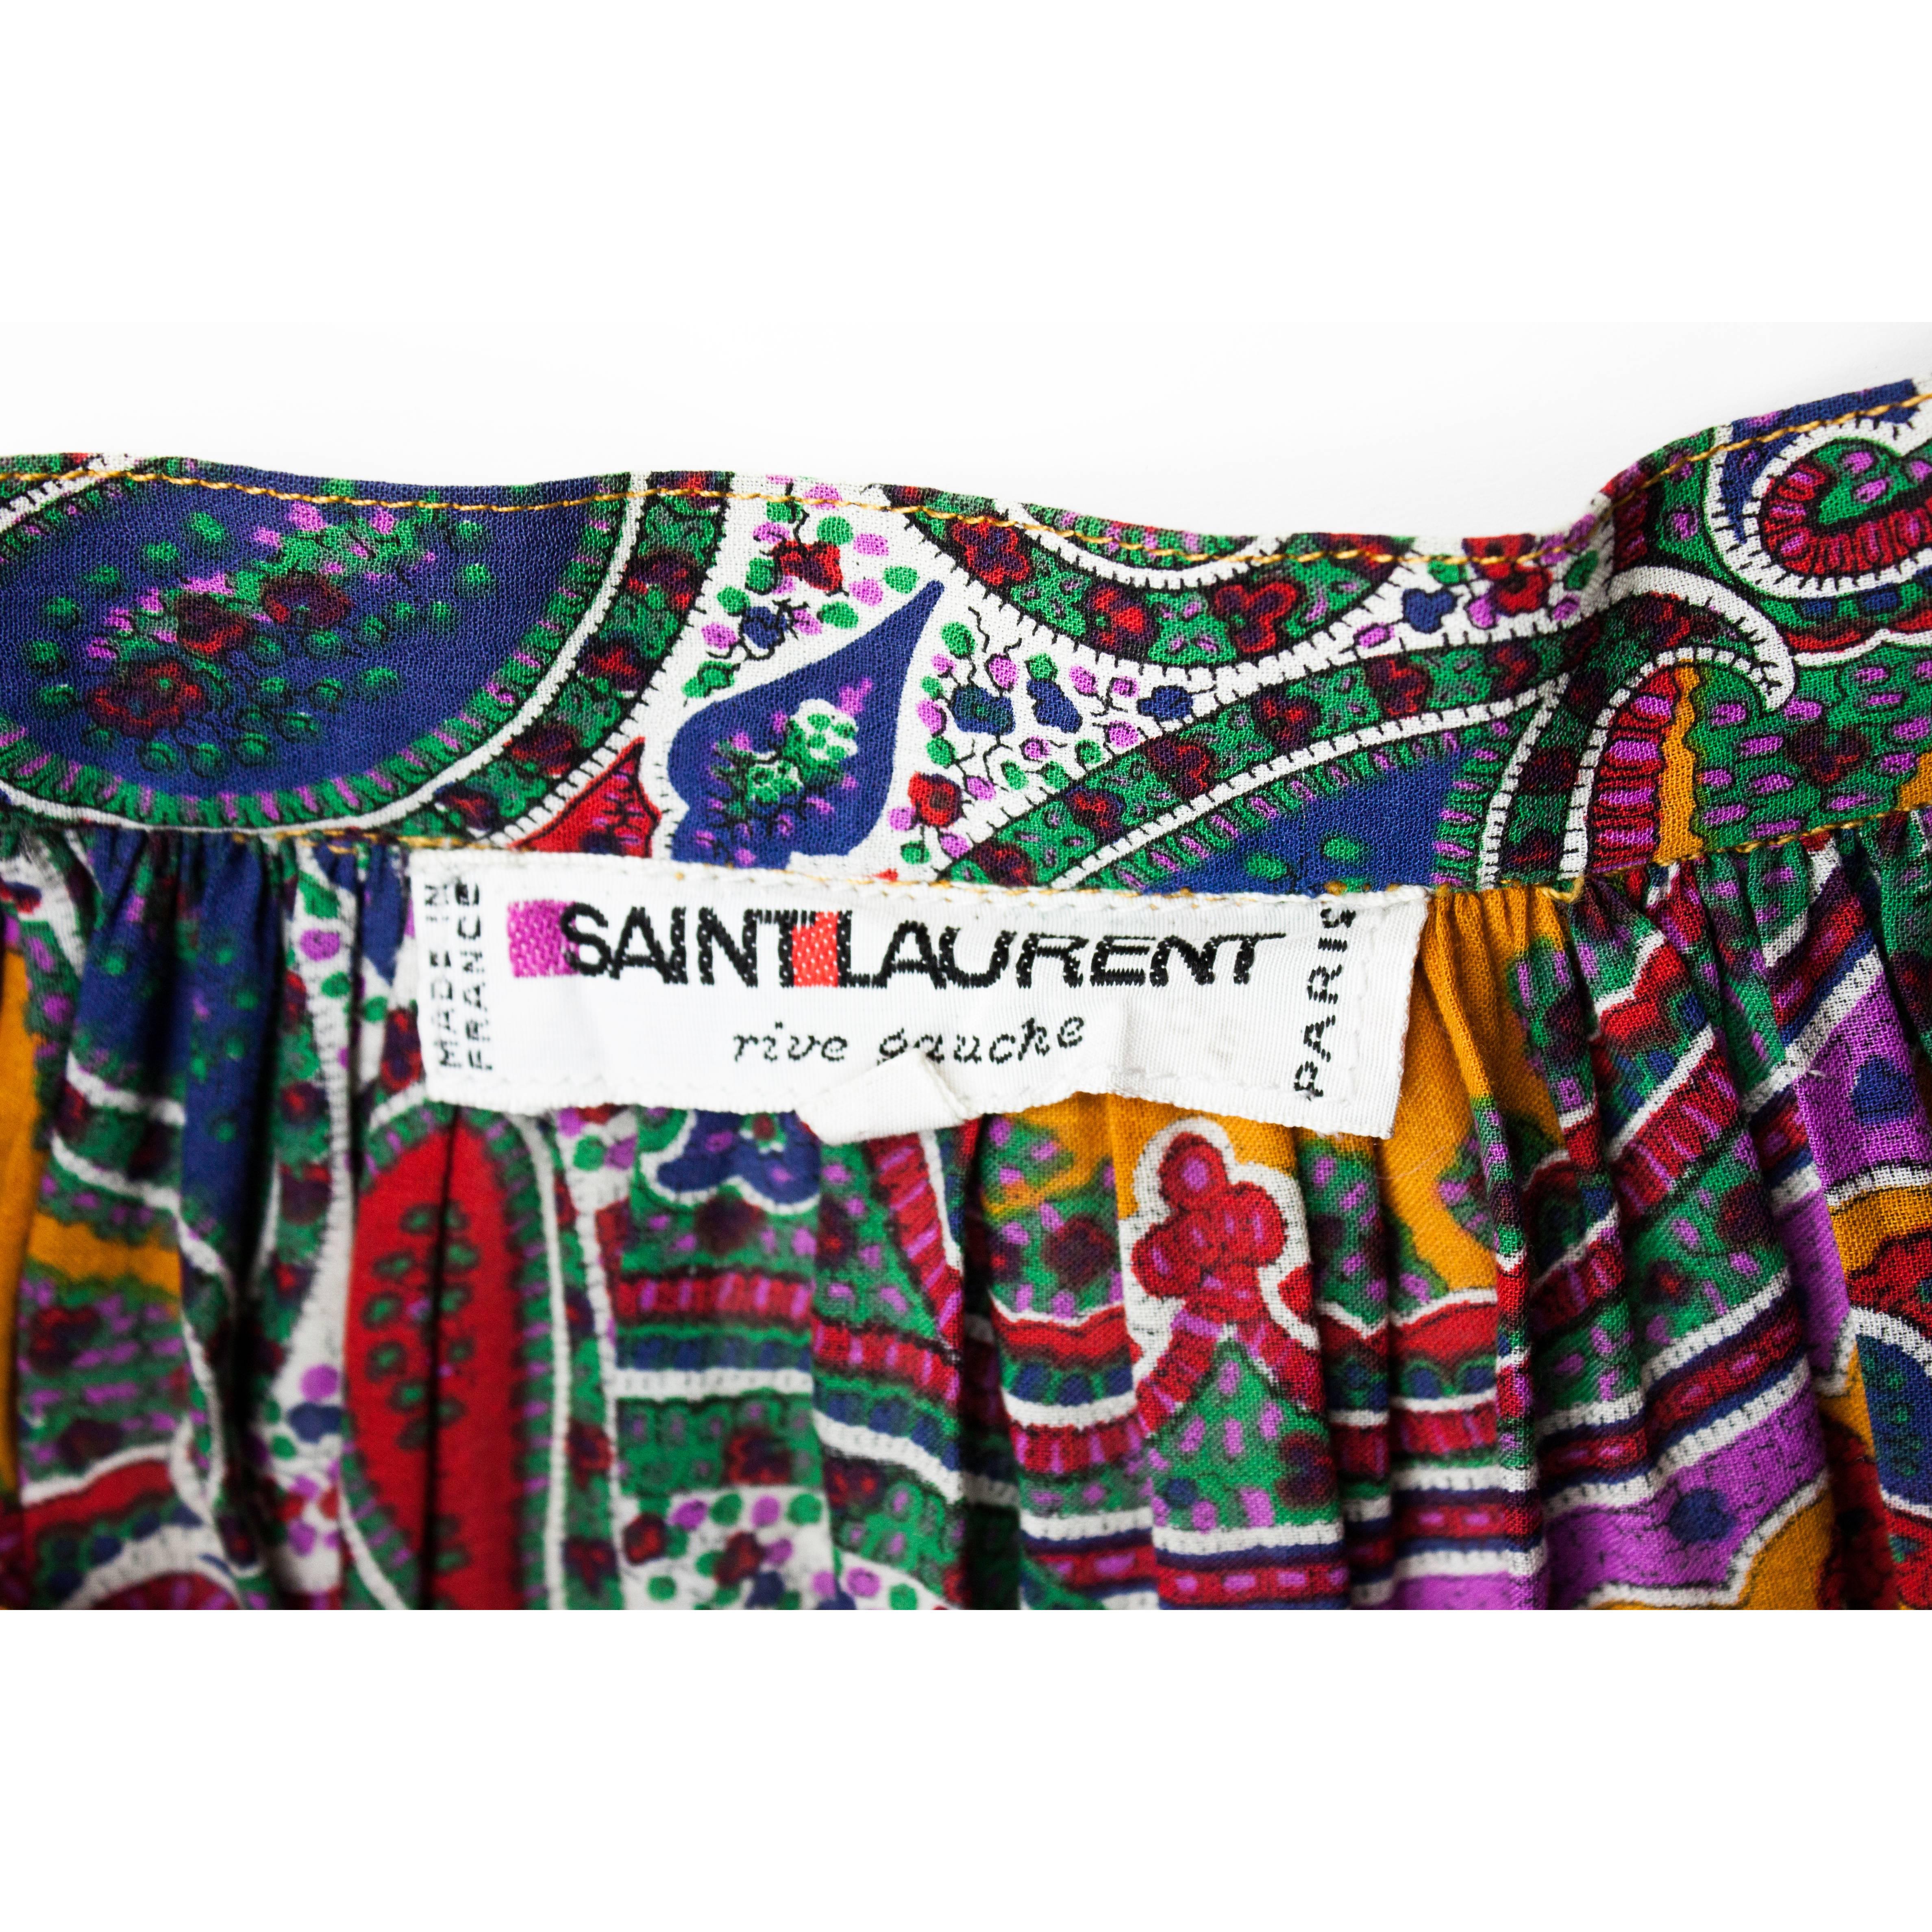 Yves Saint Laurent long layered Paisley gypsy skirt, Fall Winter 1976 2